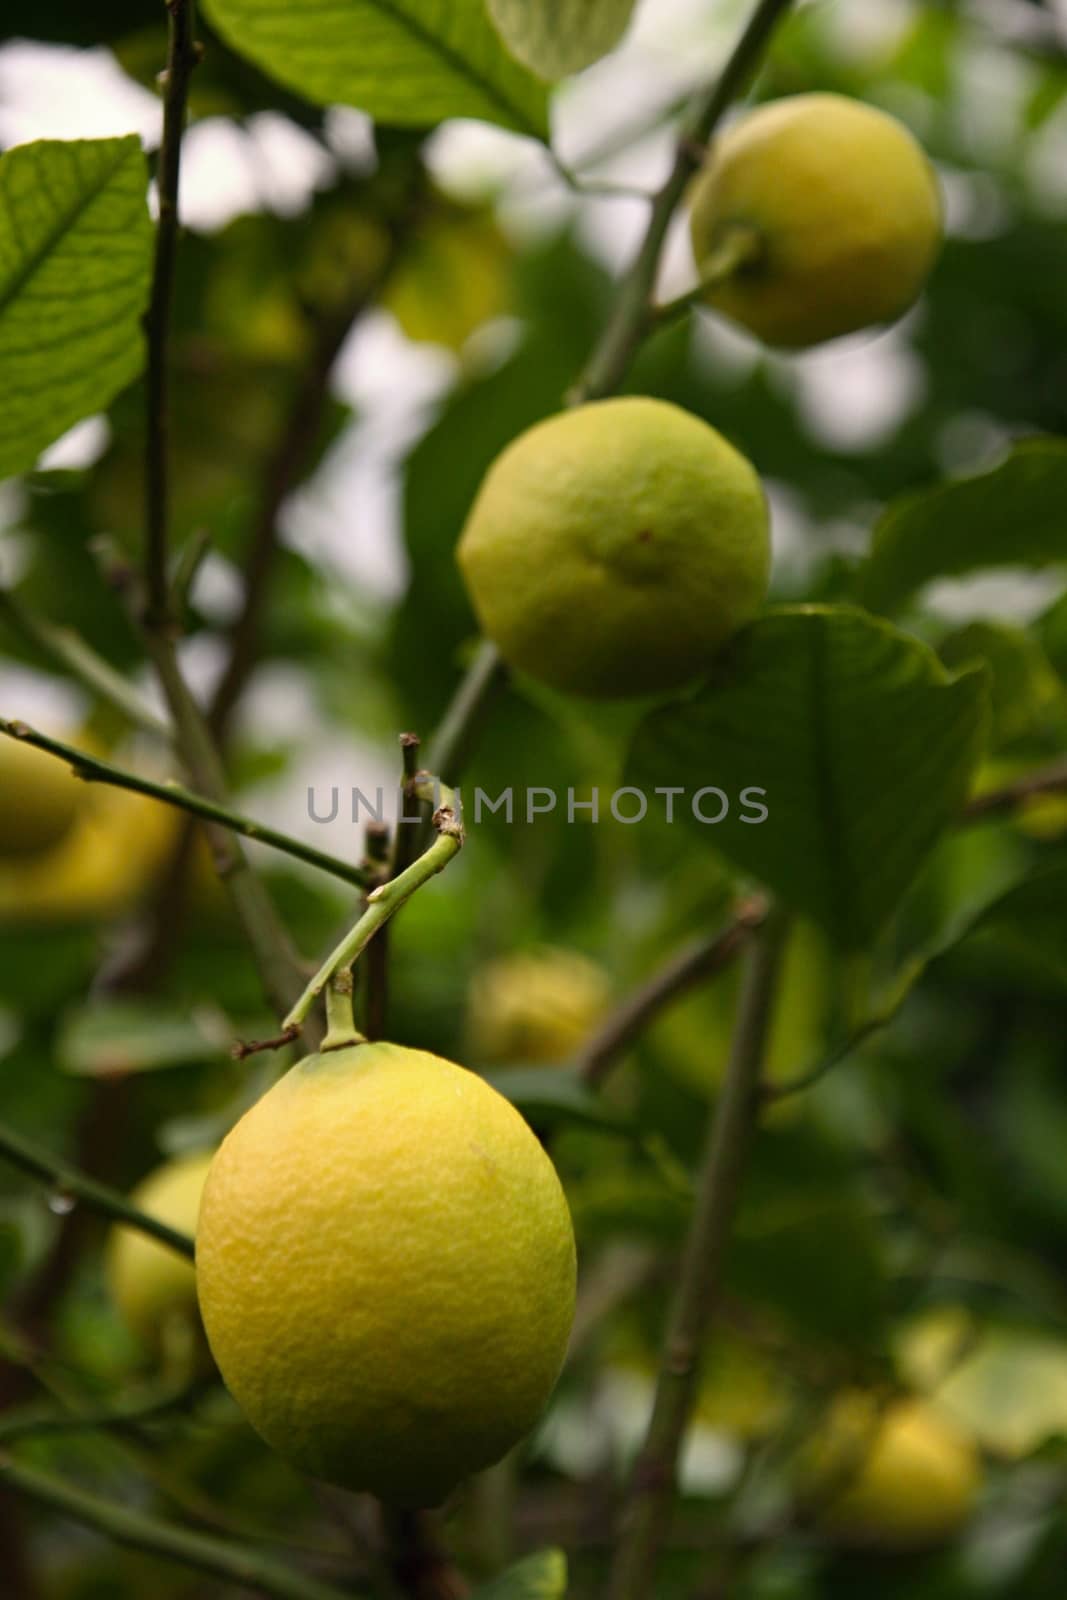 Ripe yellow lemons hanging on tree  by jnerad